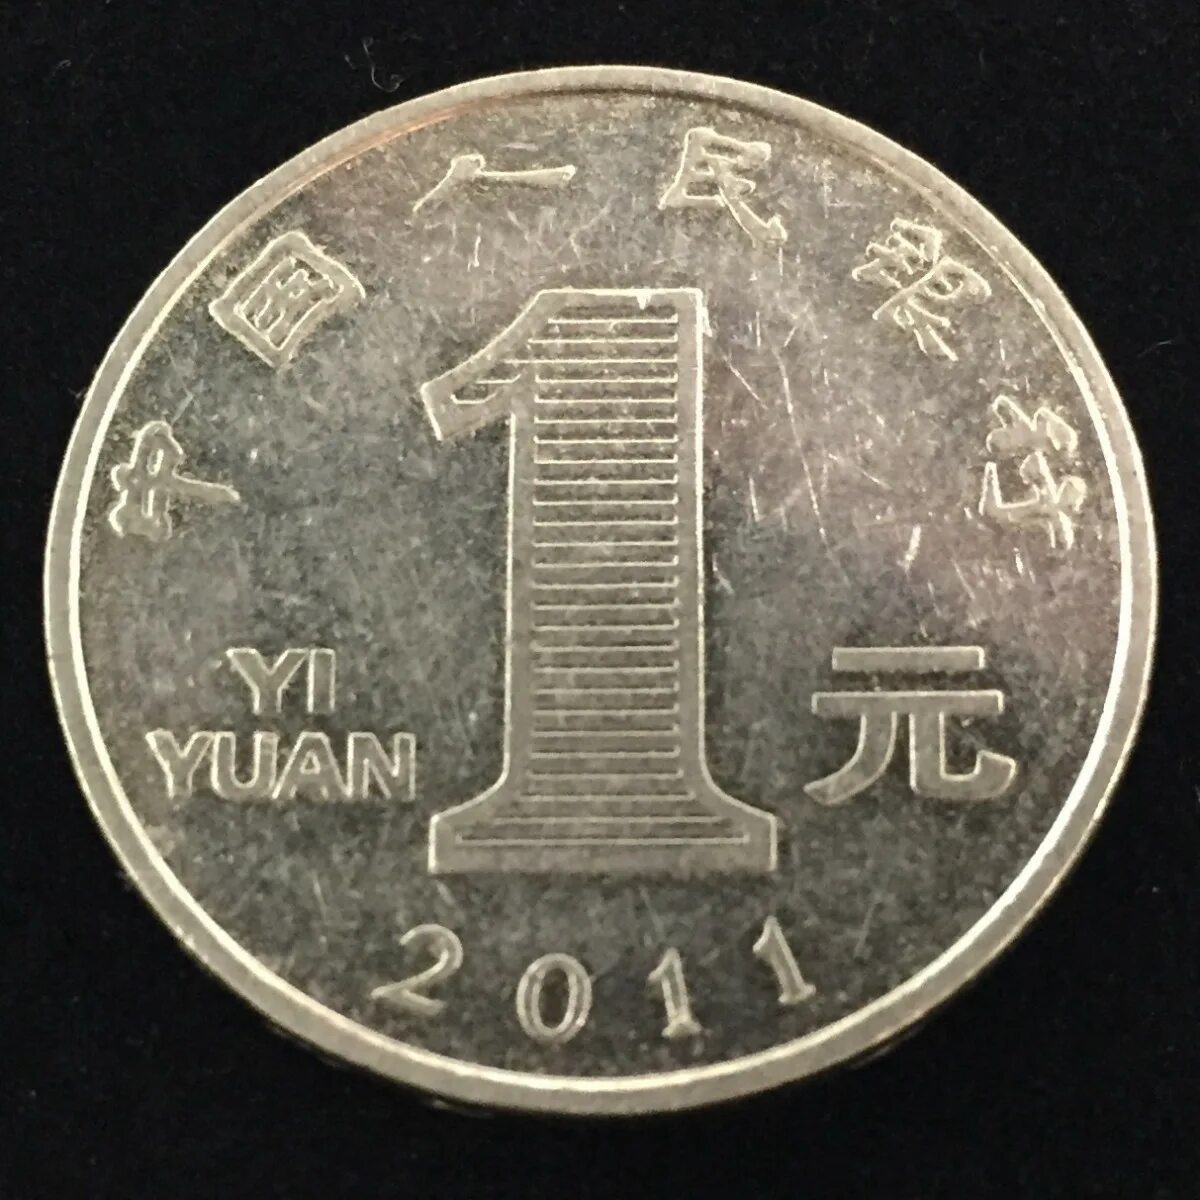 Китайский юань монеты. 1 Юань. 1 Китайский юань. Китайские монеты 1 юань 21 год. Монеты Китая 1 юань.